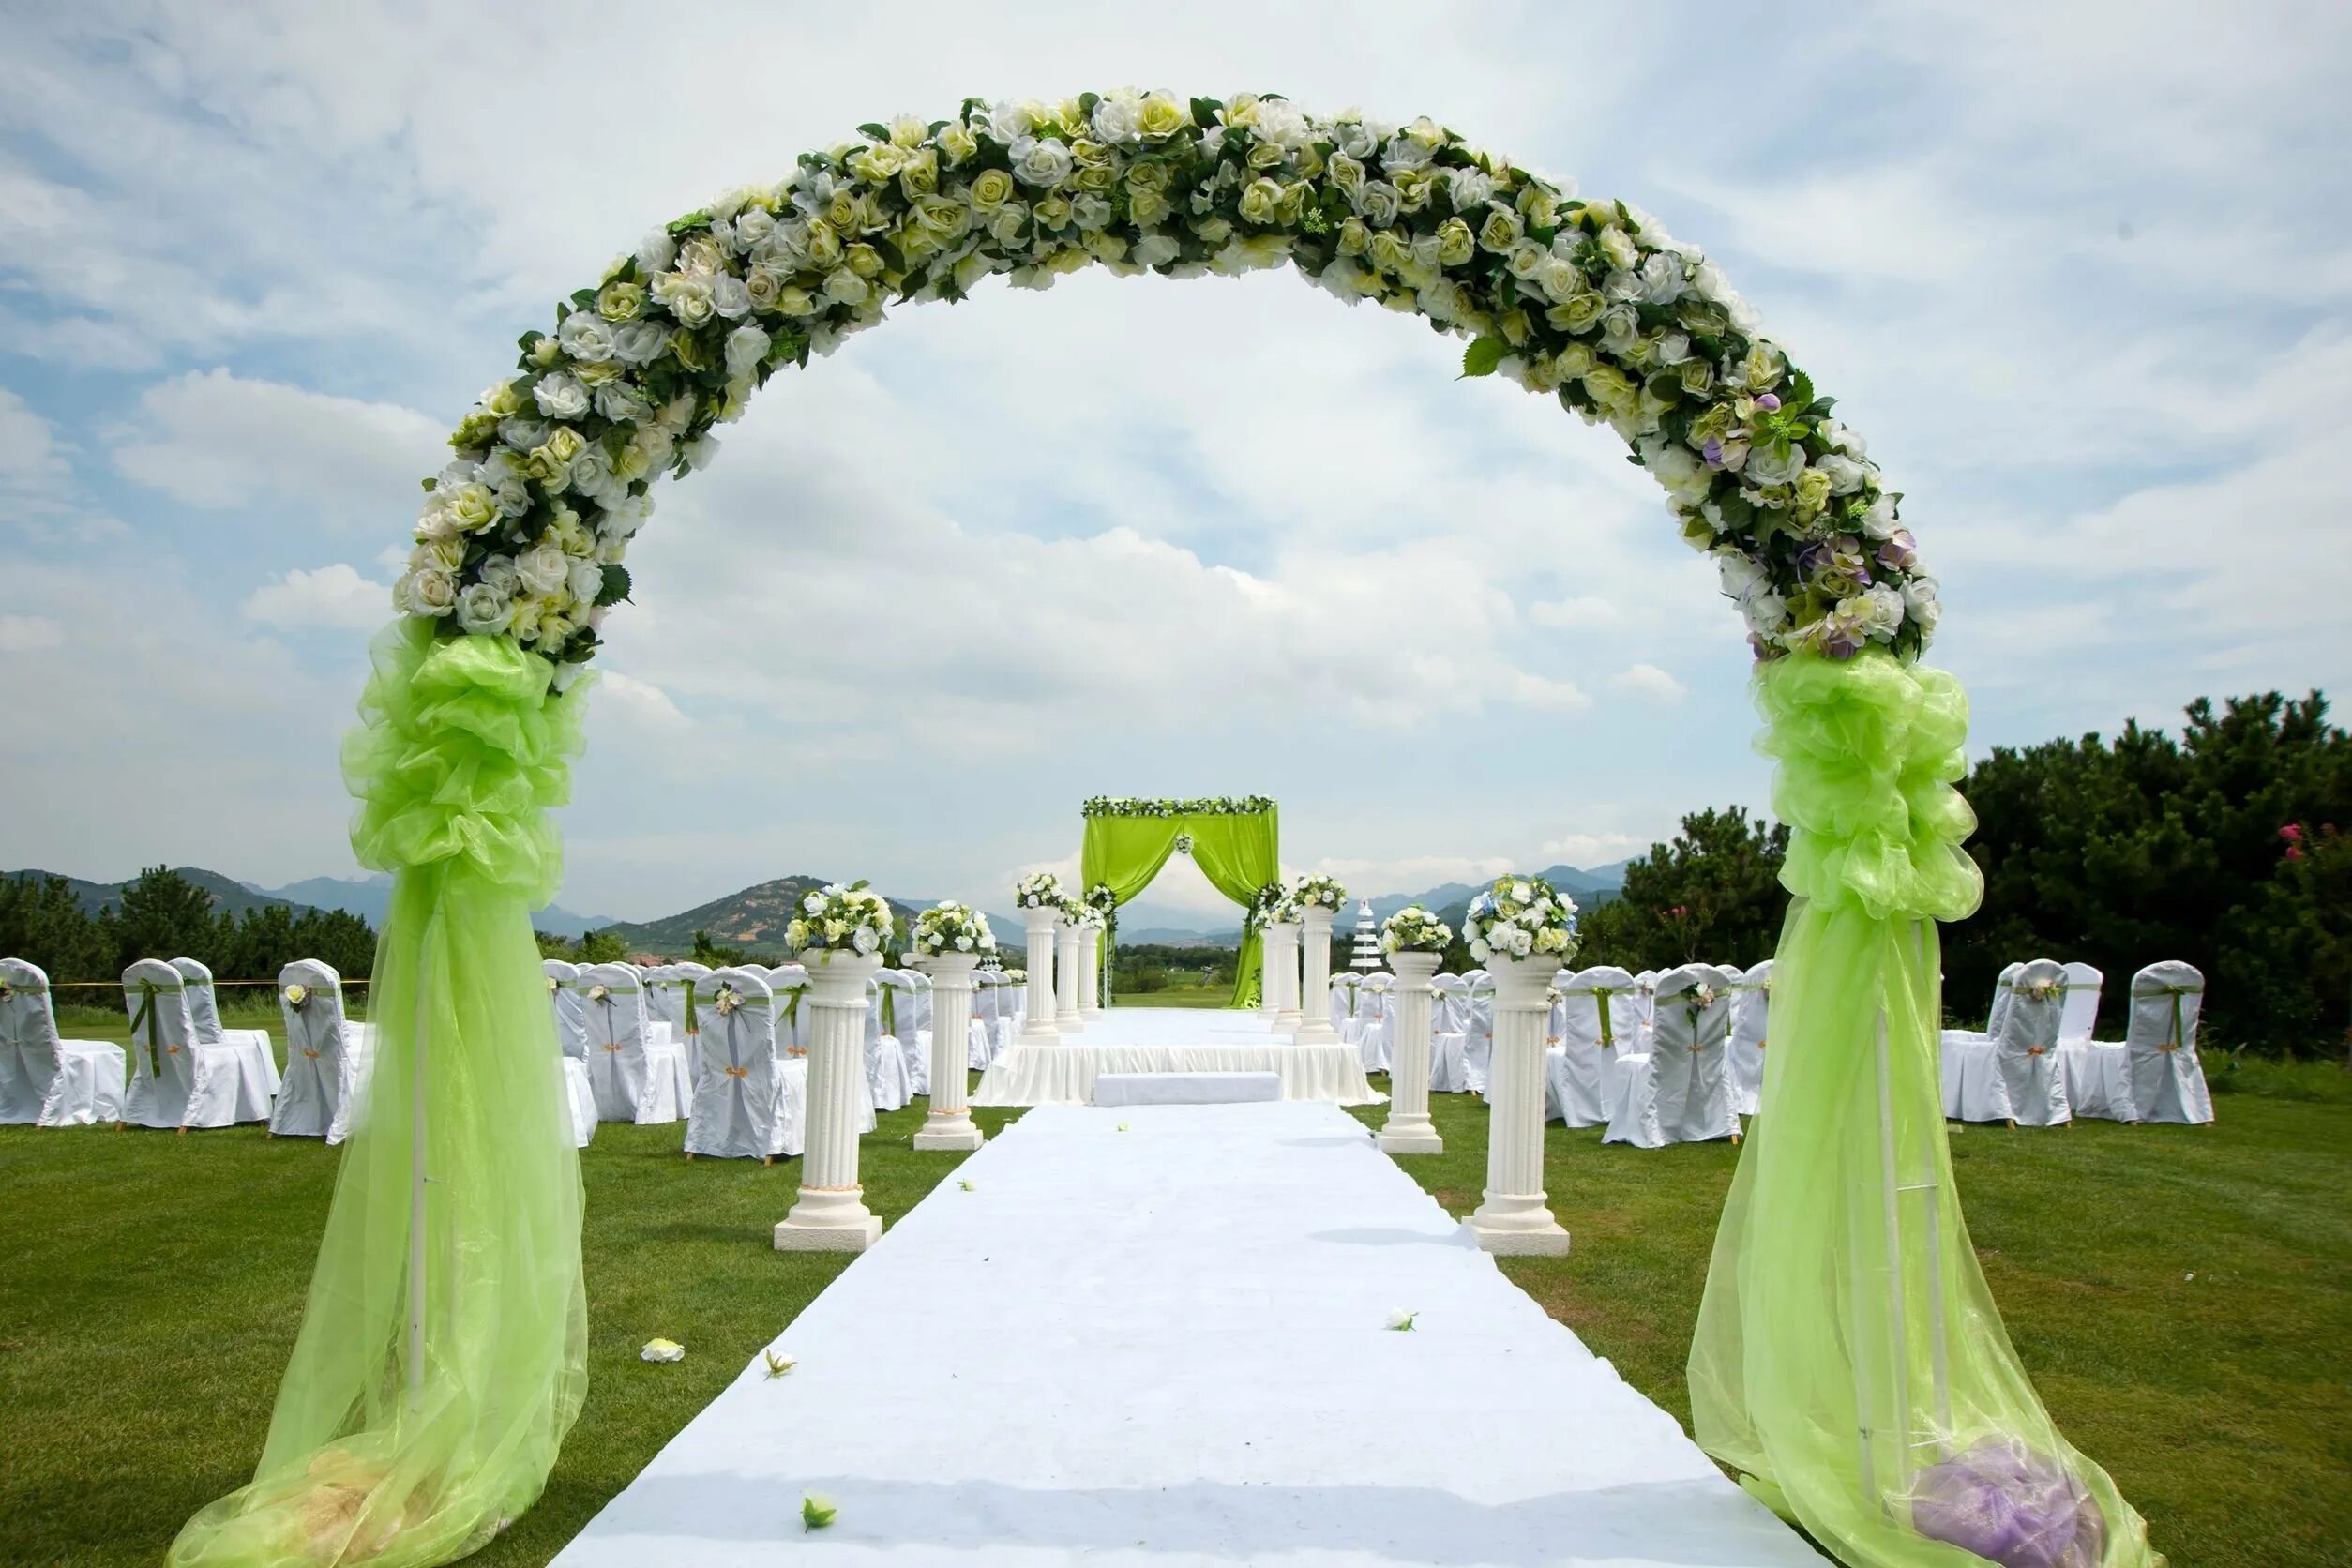 Украшение арки на свадьбу. Арка "Свадебная". Свадебная Цветочная арка. Арка для свадьбы в зеленом цвете.